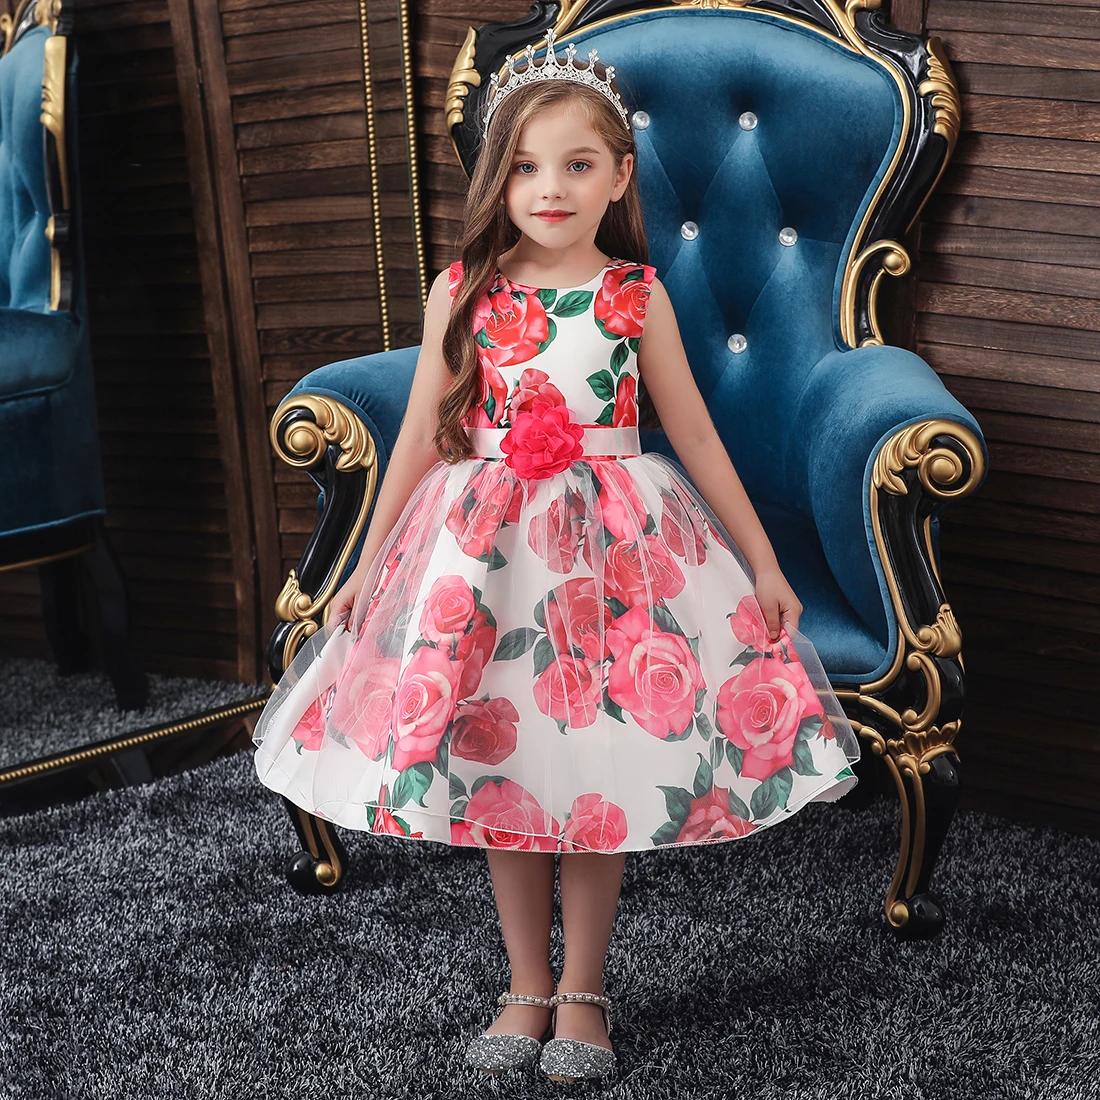 Yaseking Baby Girls 2pcs Clothes Set Fashion Rabbit Style Dresses Cotton Short Sleeve Princess Dress 